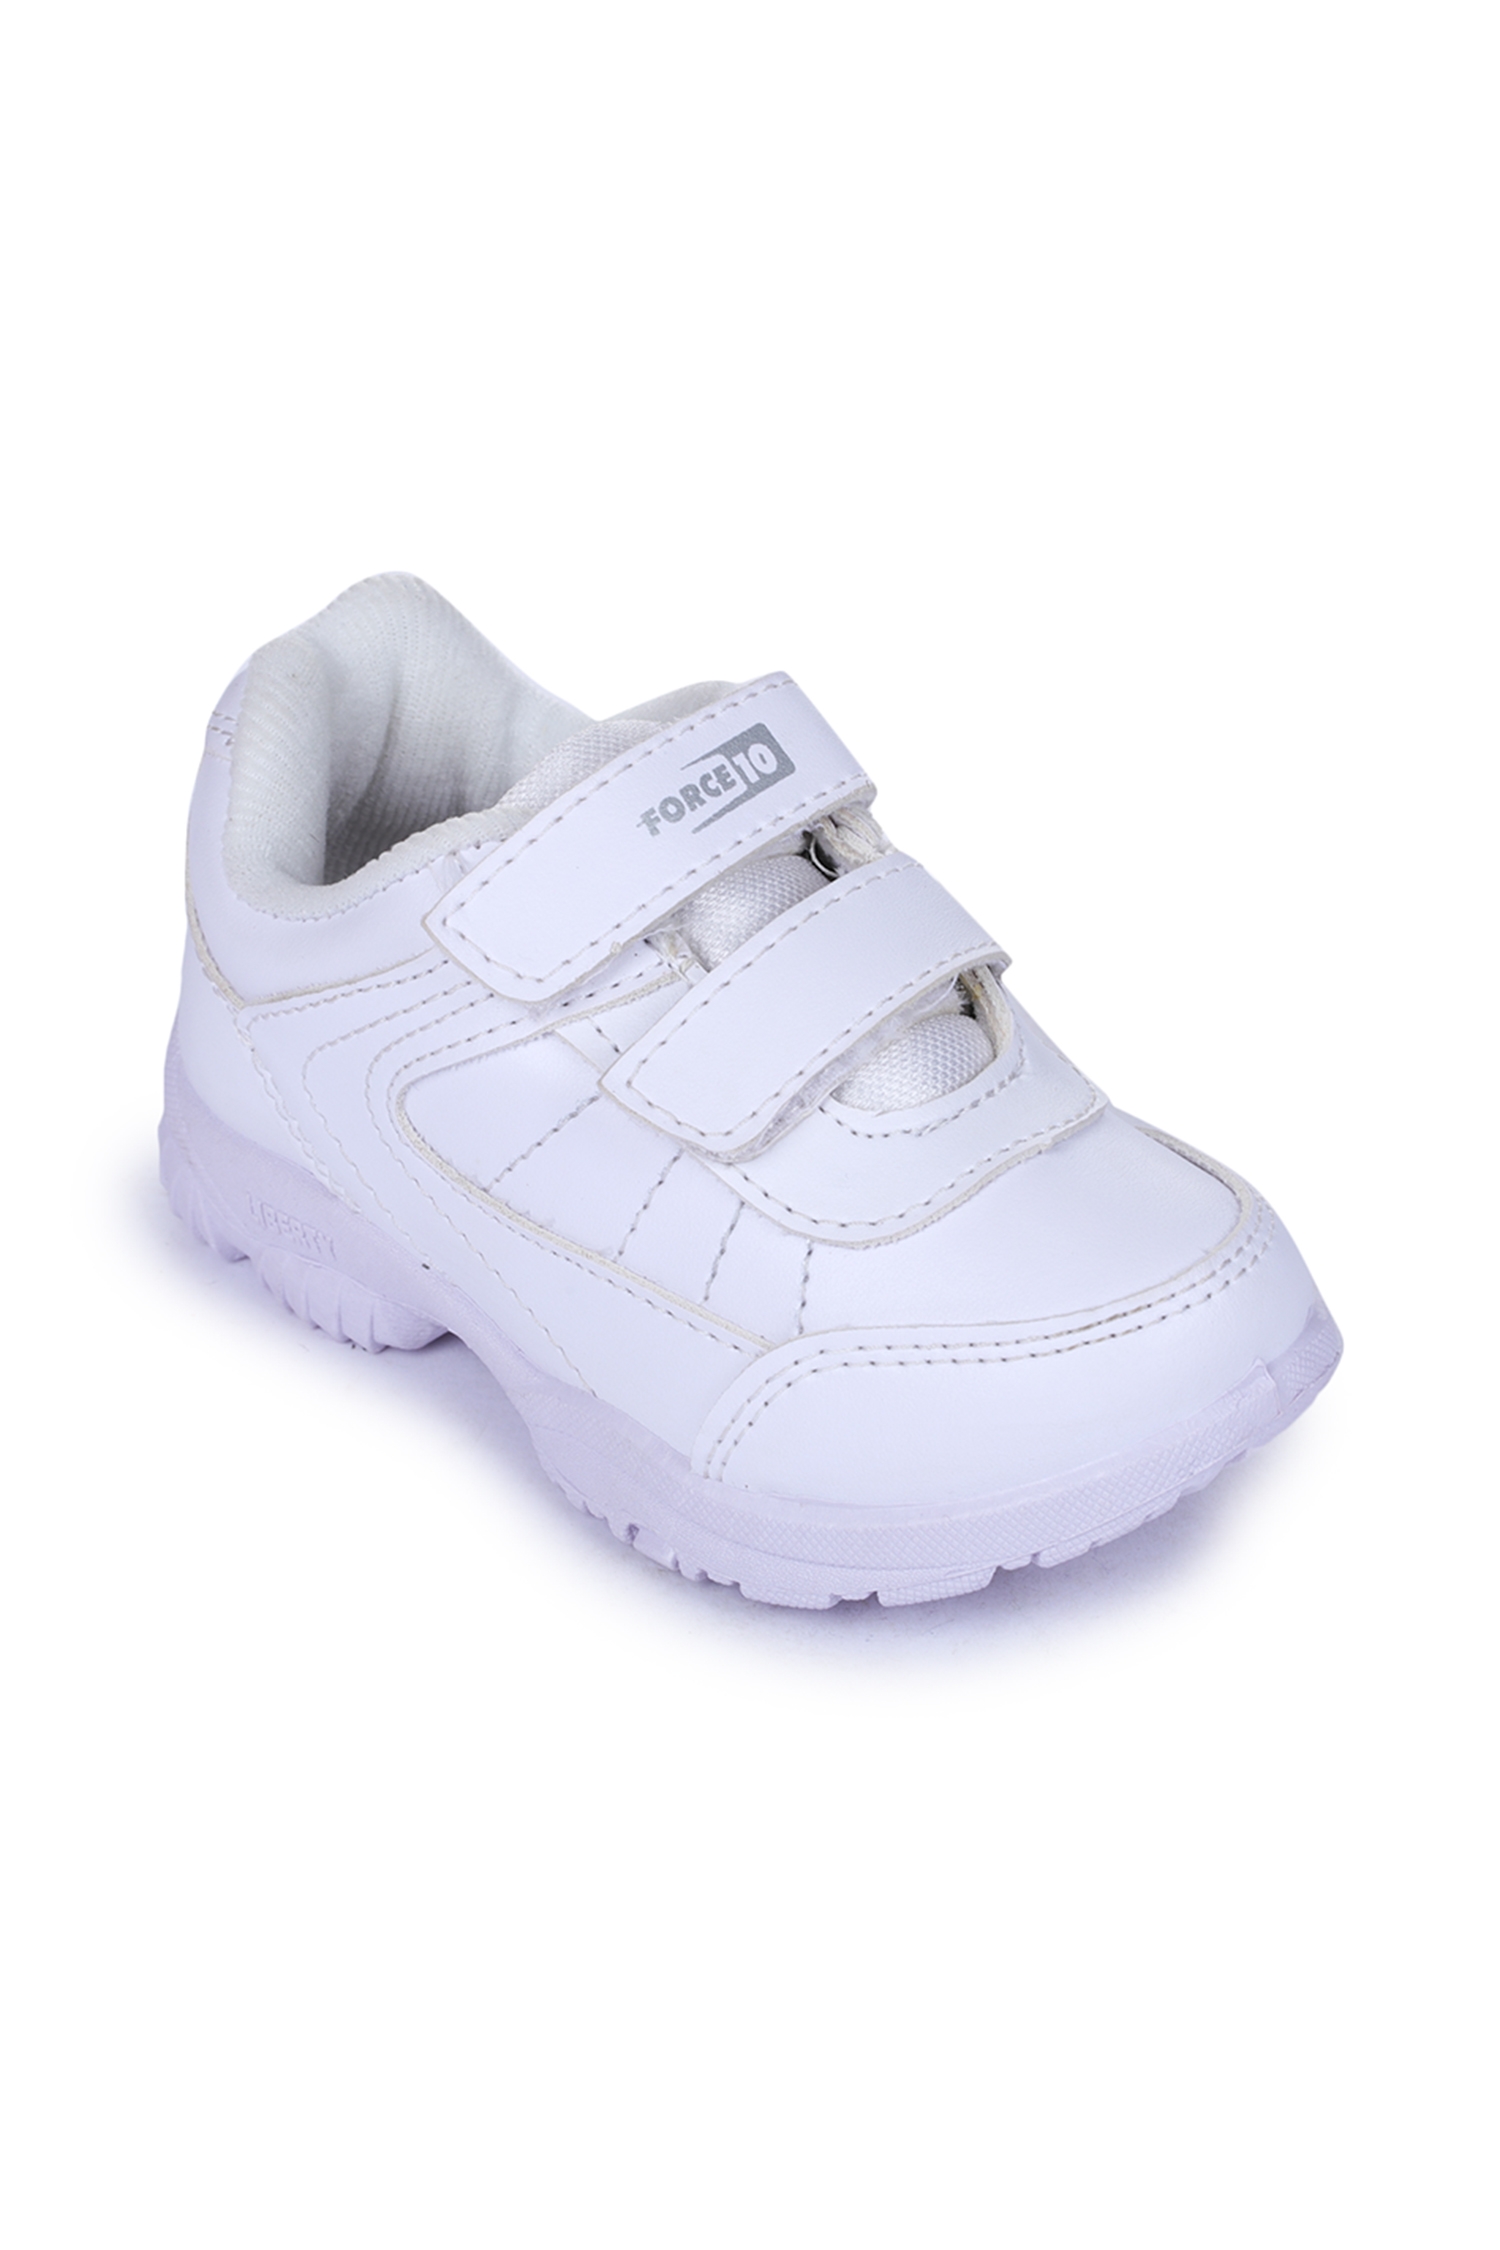 Liberty | Liberty Force 10 White School Shoes SCHZONE-DV_White For - Boys